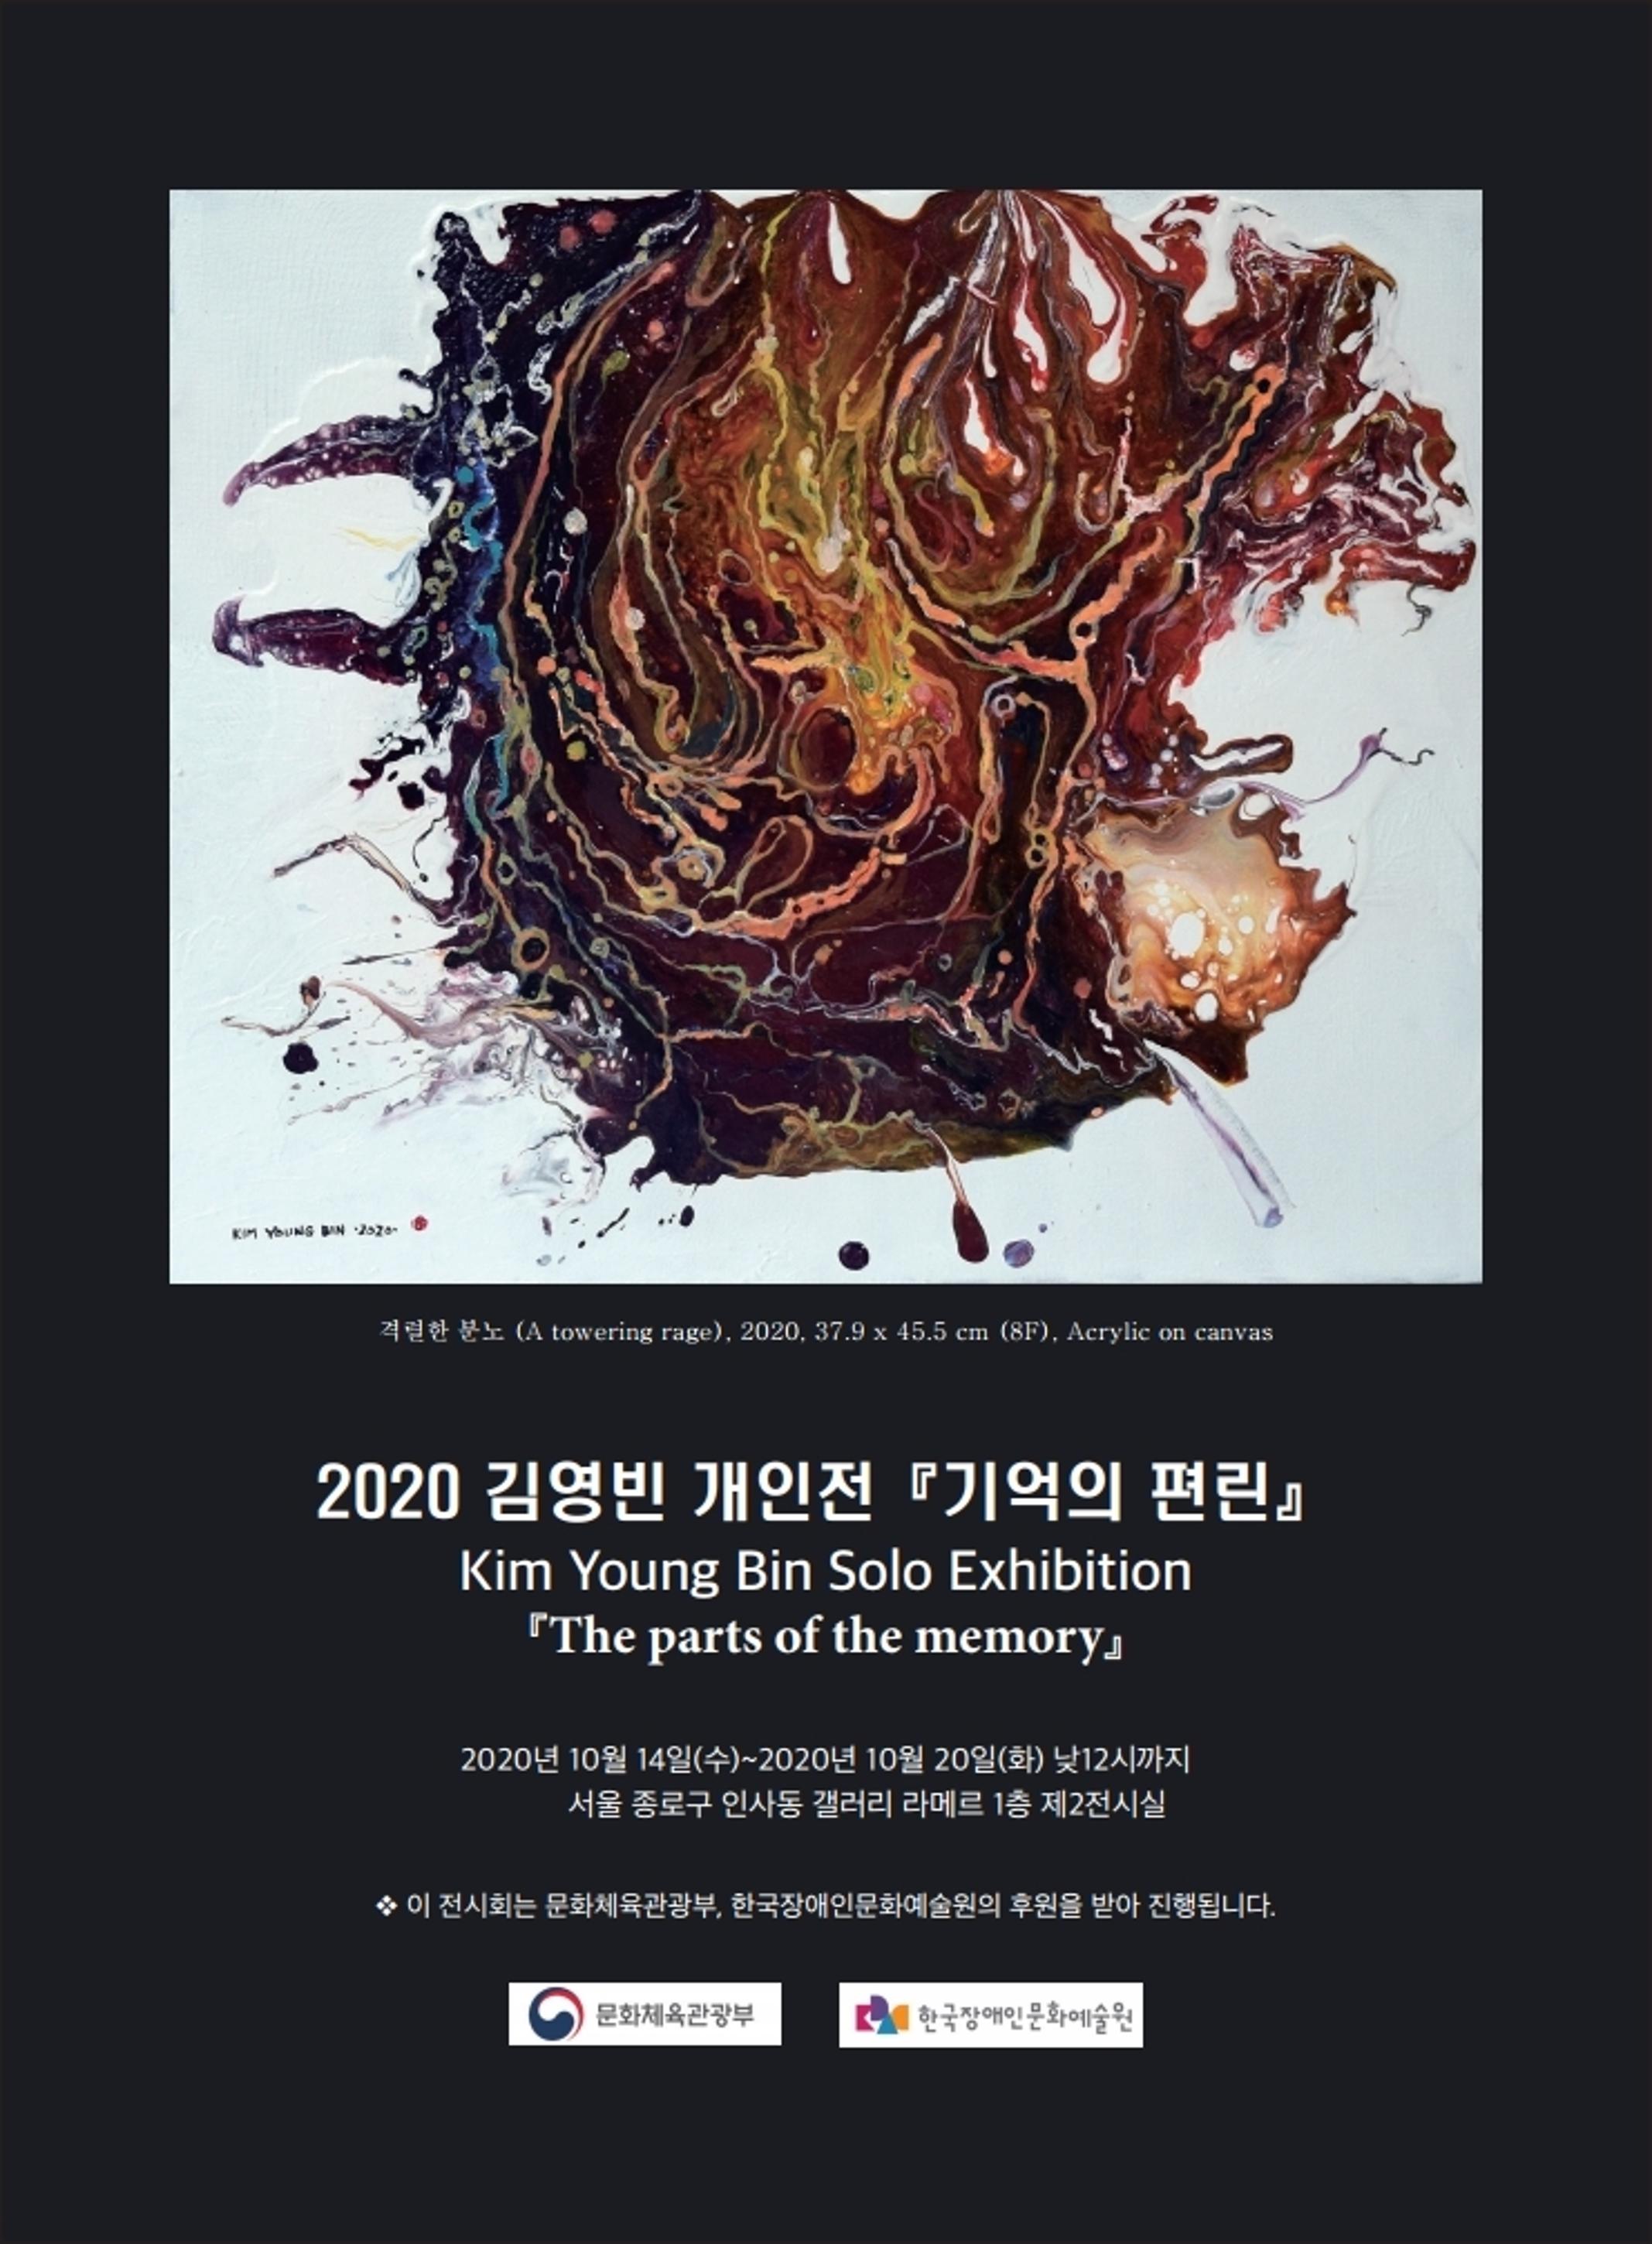 <p>격렬한 분노(A towering rage), 2020, 37.9 × 45.5cm (8F), Acrylic on canvas</p>
<h1>2020 김영빈 개인전 『기억의 편린』 | Kim Young Bin Solo Exhibition 『The parts of the memory』</h1>
<p>2020년 10월 14일(수) ~ 2020년 10월 20일(화) 낮12시까지 서울 종로구 인사동 갤러리 라메르 1층 제2전시실</p>
<p>* 이 전시회는 문화체육관광부, 한국장애인문화예술원의 후원을 받아 진행됩니다.</p>
<p>문화체육관광부, 한국장애인문화예술원</p>